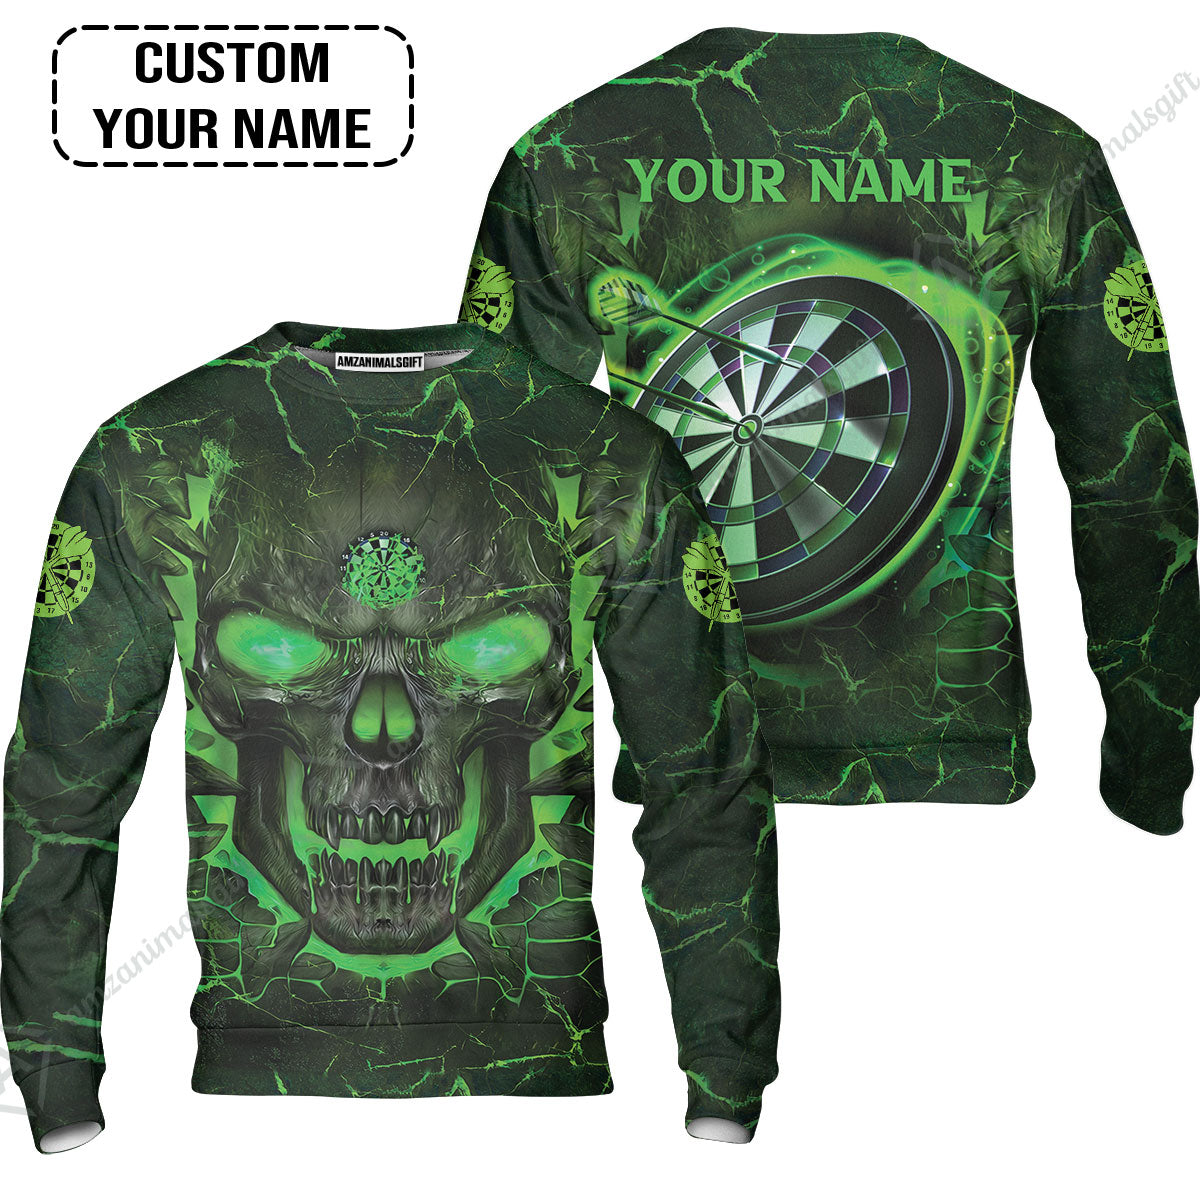 Customized Darts Sweatshirt, Flame Green Skull Dartboard Personalized Skull And Darts Sweatshirt